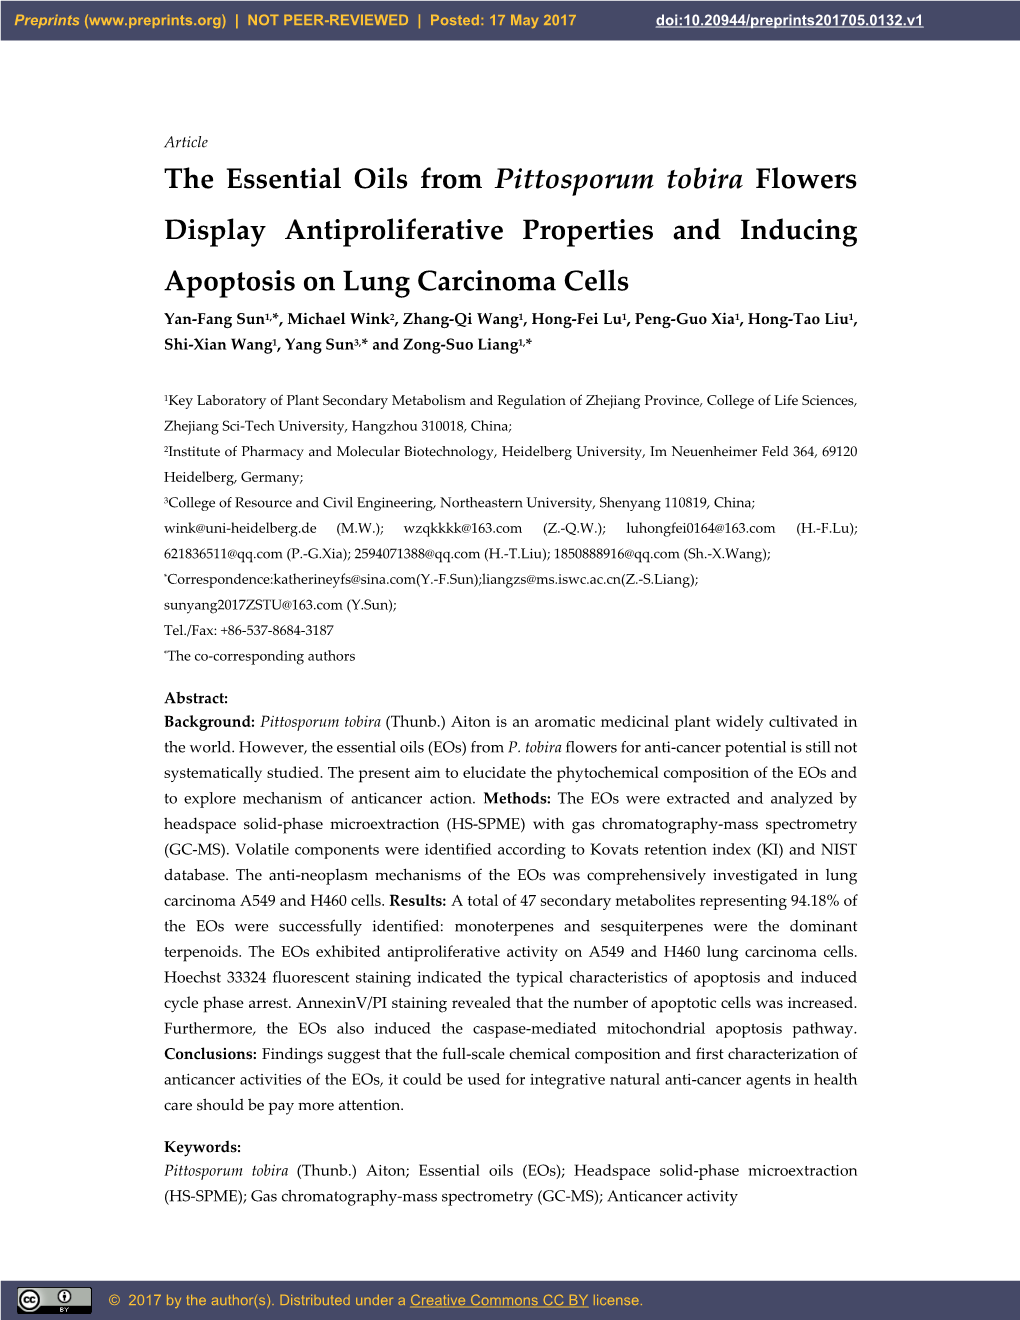 The Essential Oils from Pittosporum Tobira Flowers Display